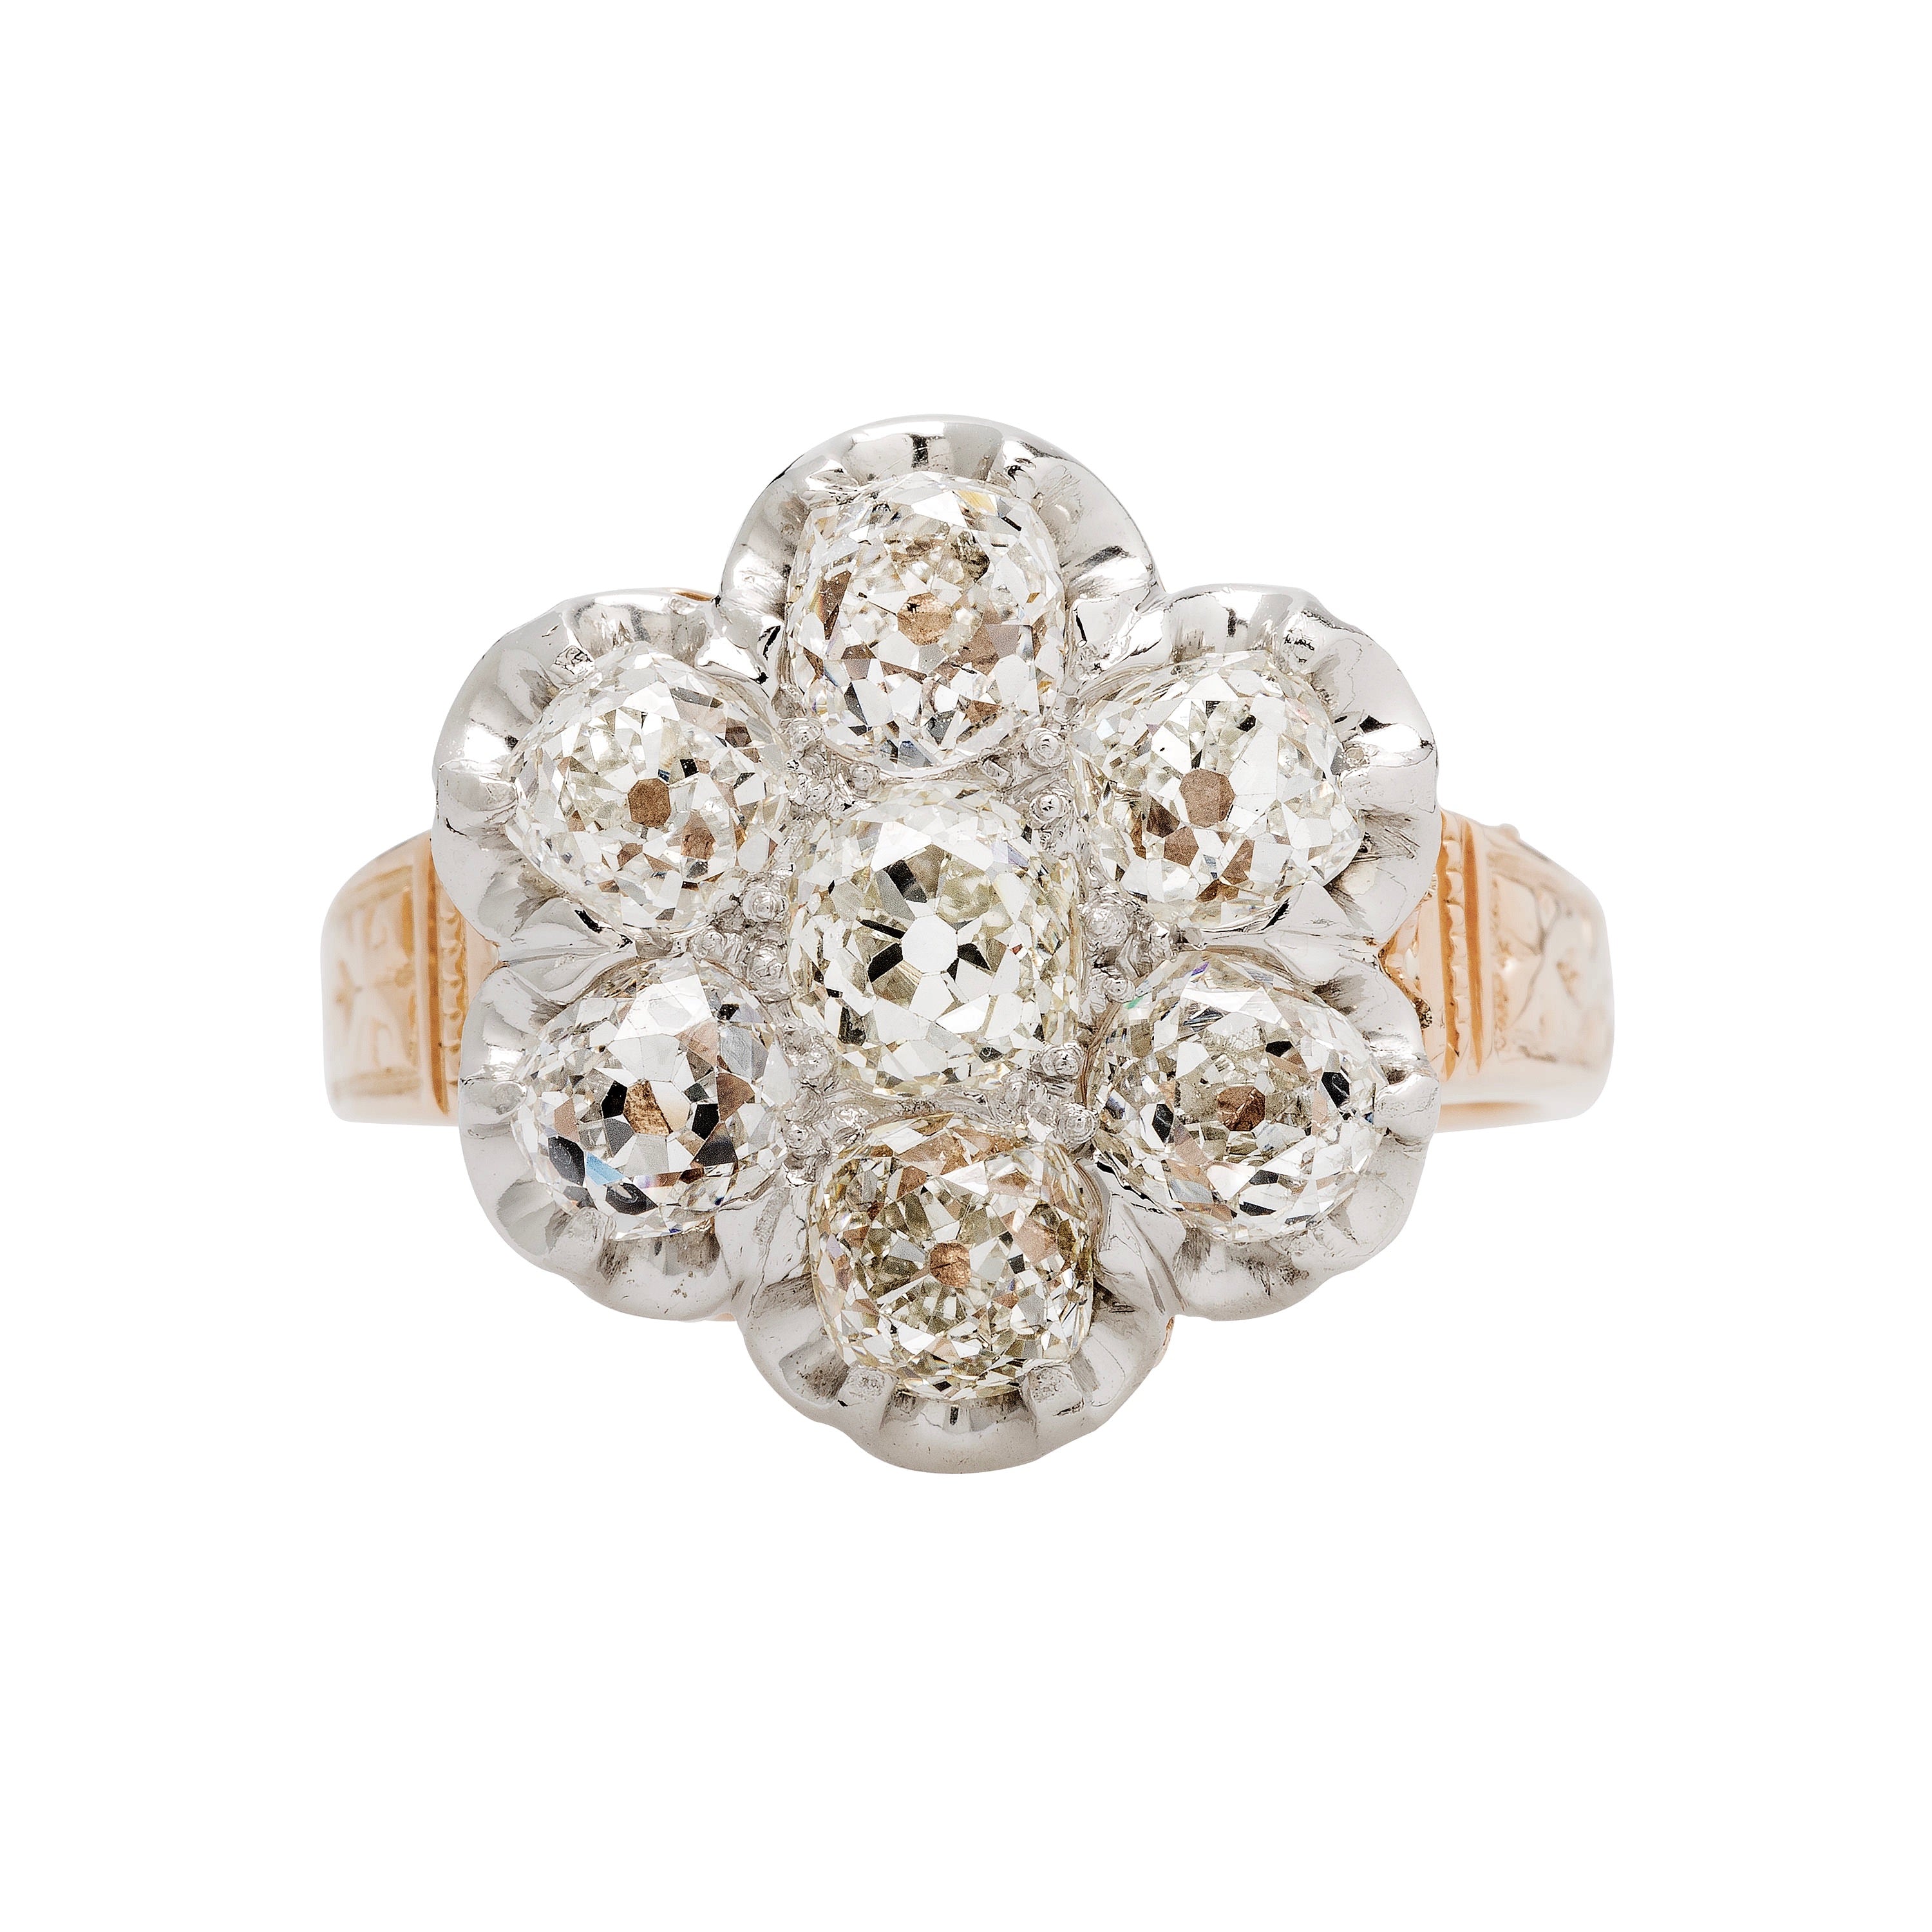 Gorgeous Victorian Era Diamond Cluster Ring | Brook Hill